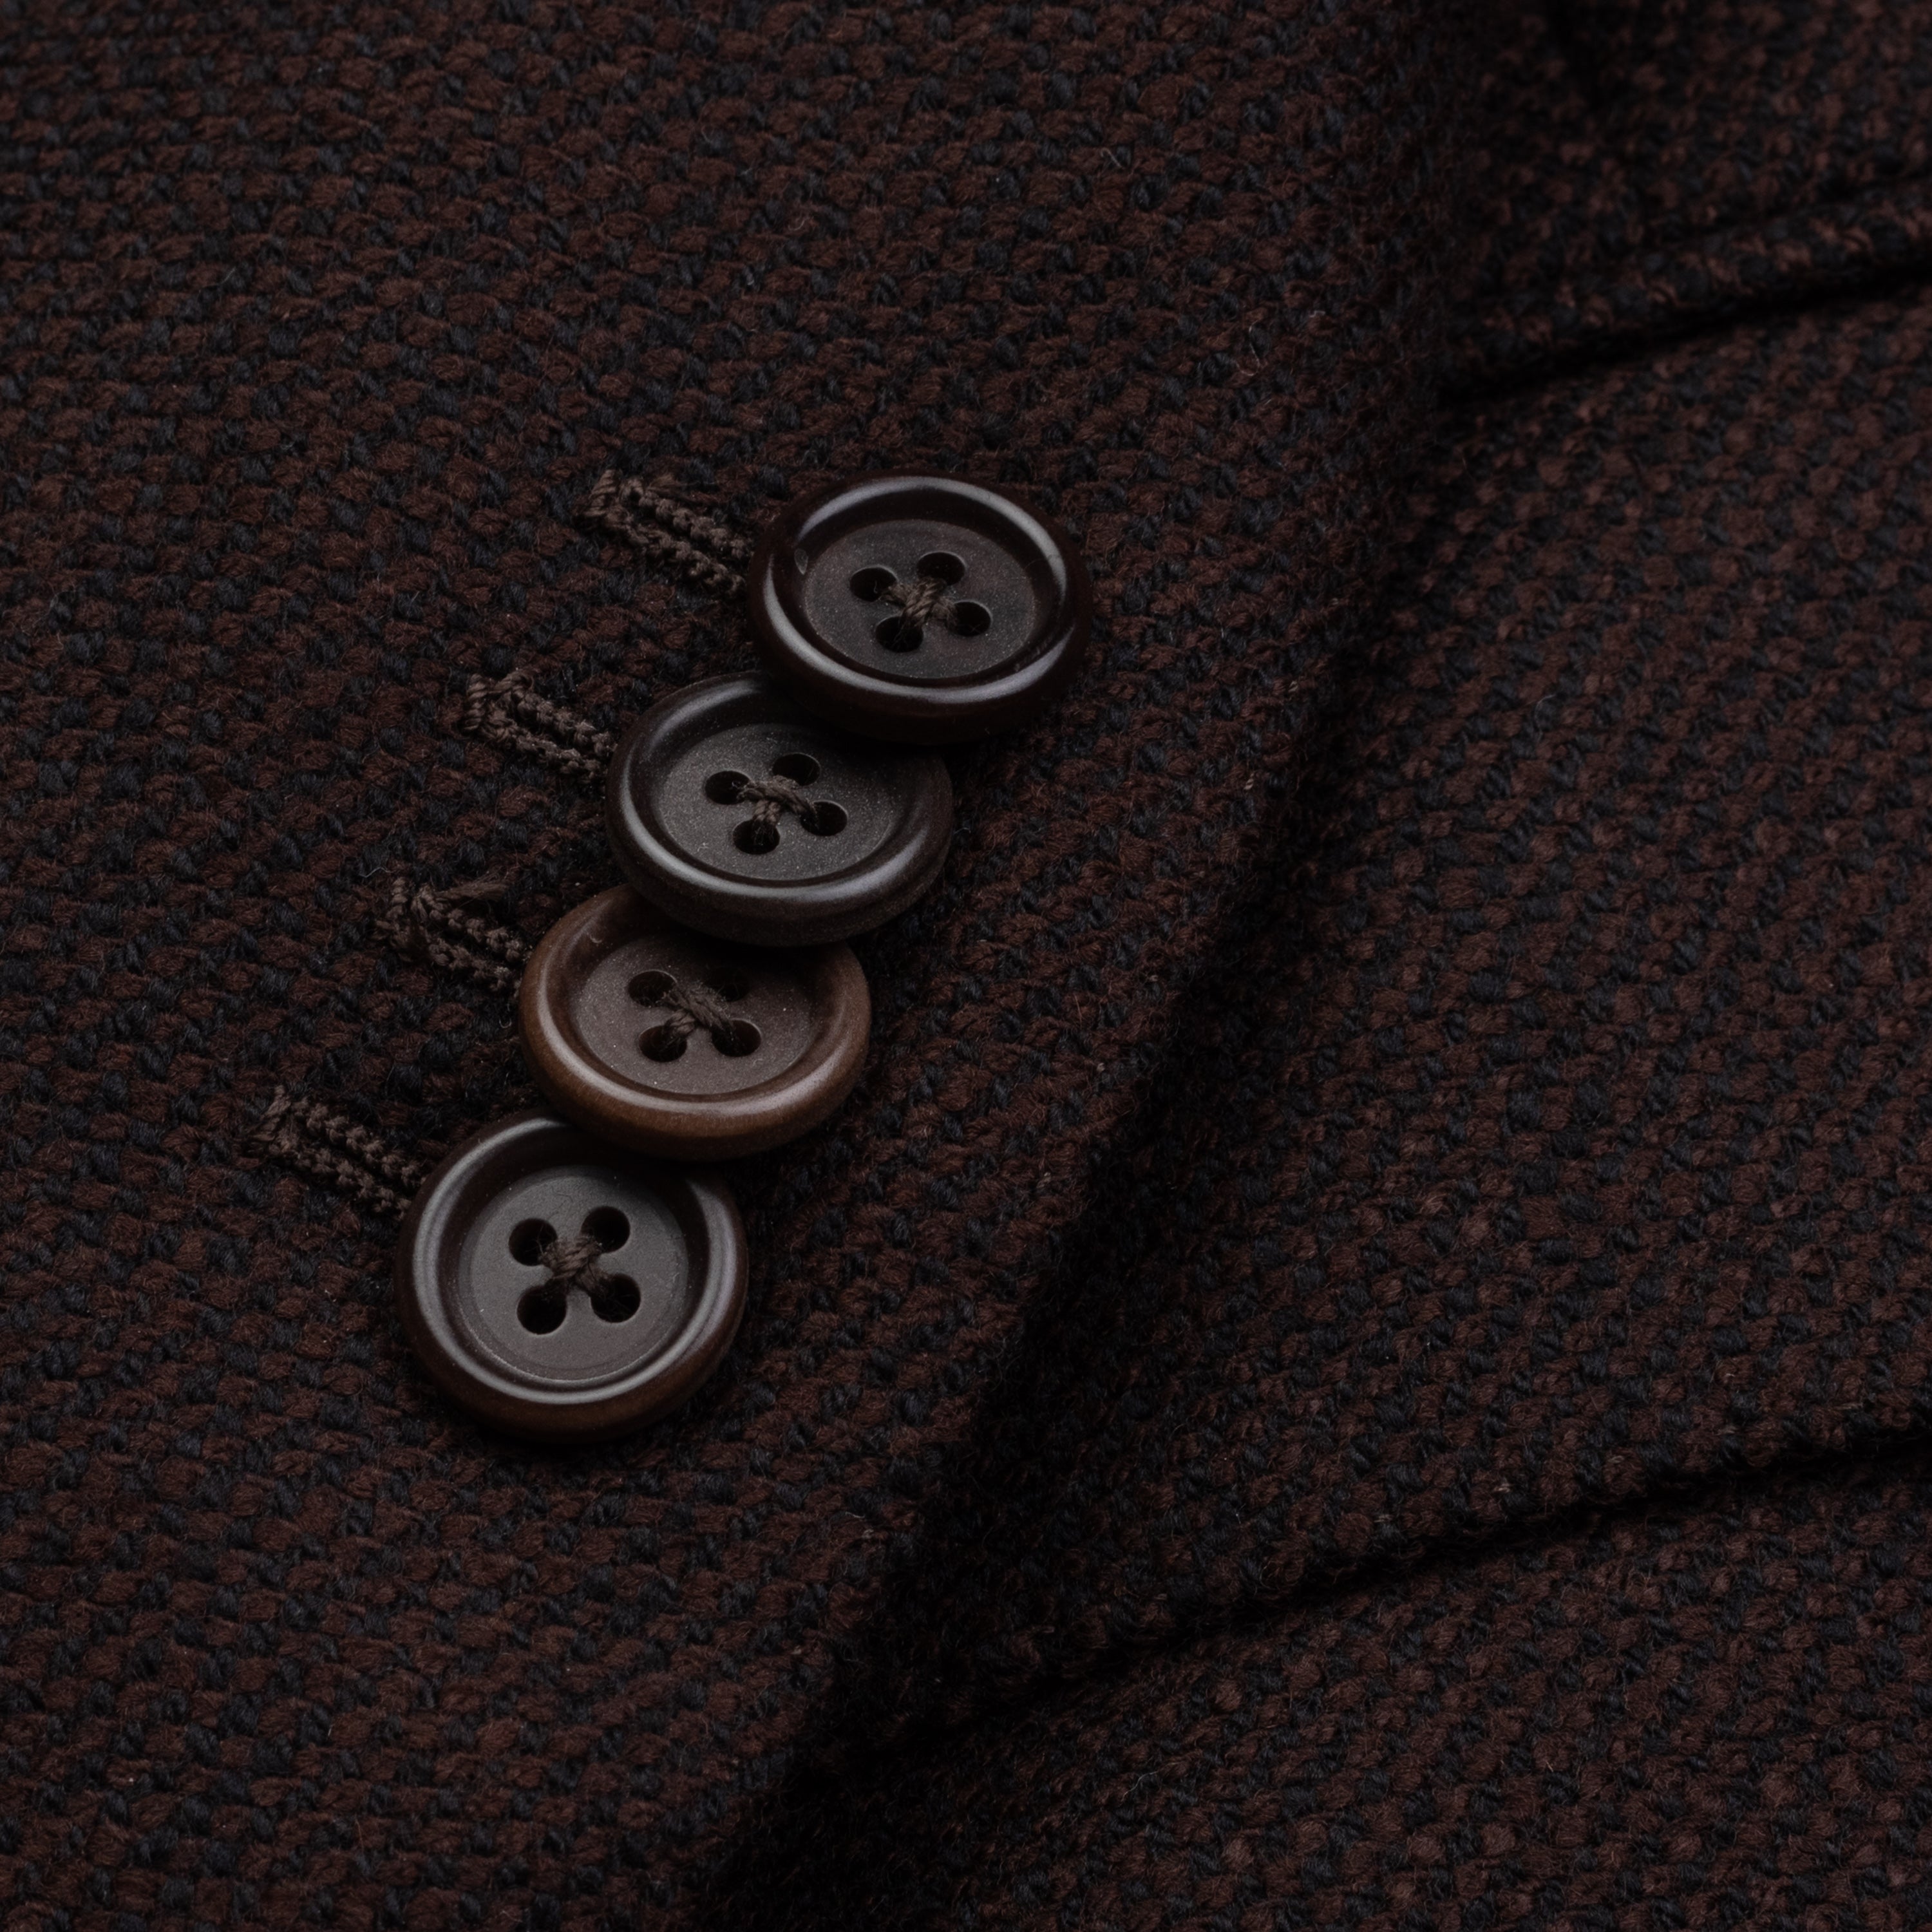 SARTORIA CASTANGIA Handmade Brown Wool Flannel Jacket EU 50 NEW US 40 CASTANGIA